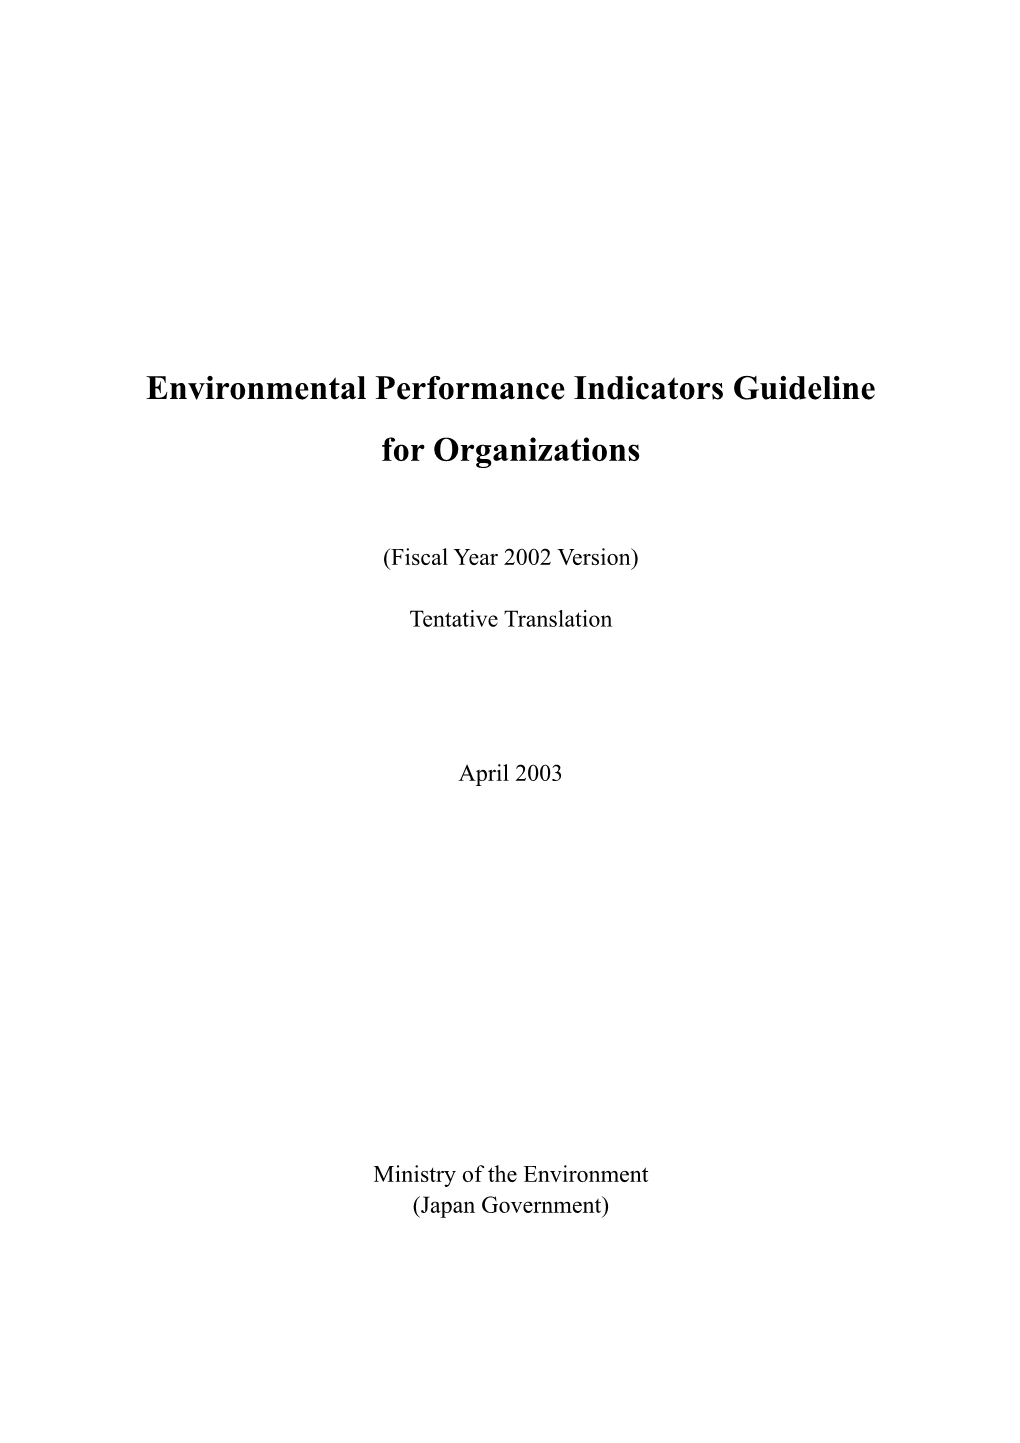 Environmental Performance Indicators Guideline for Organizations